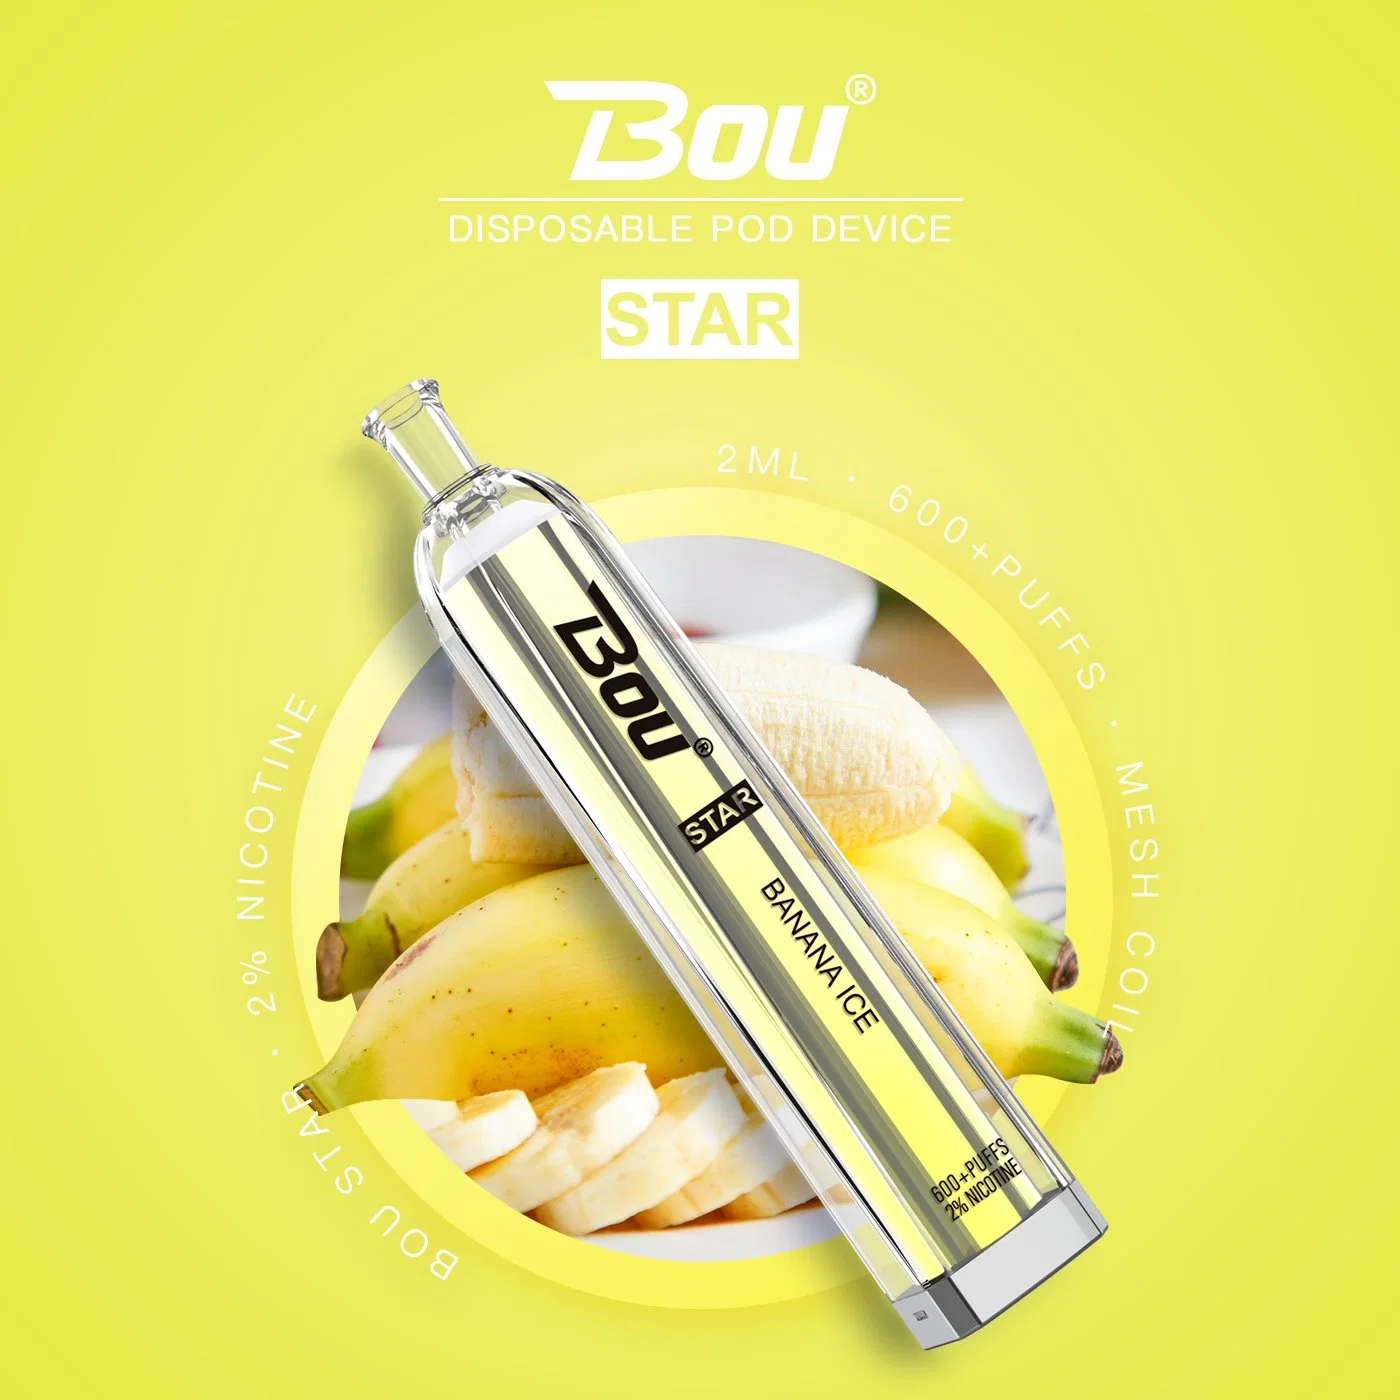 Bou Star 600 Puff 2ml de VAPE UK Cigarrillo Electrónico Desechable cigarrillo desechable